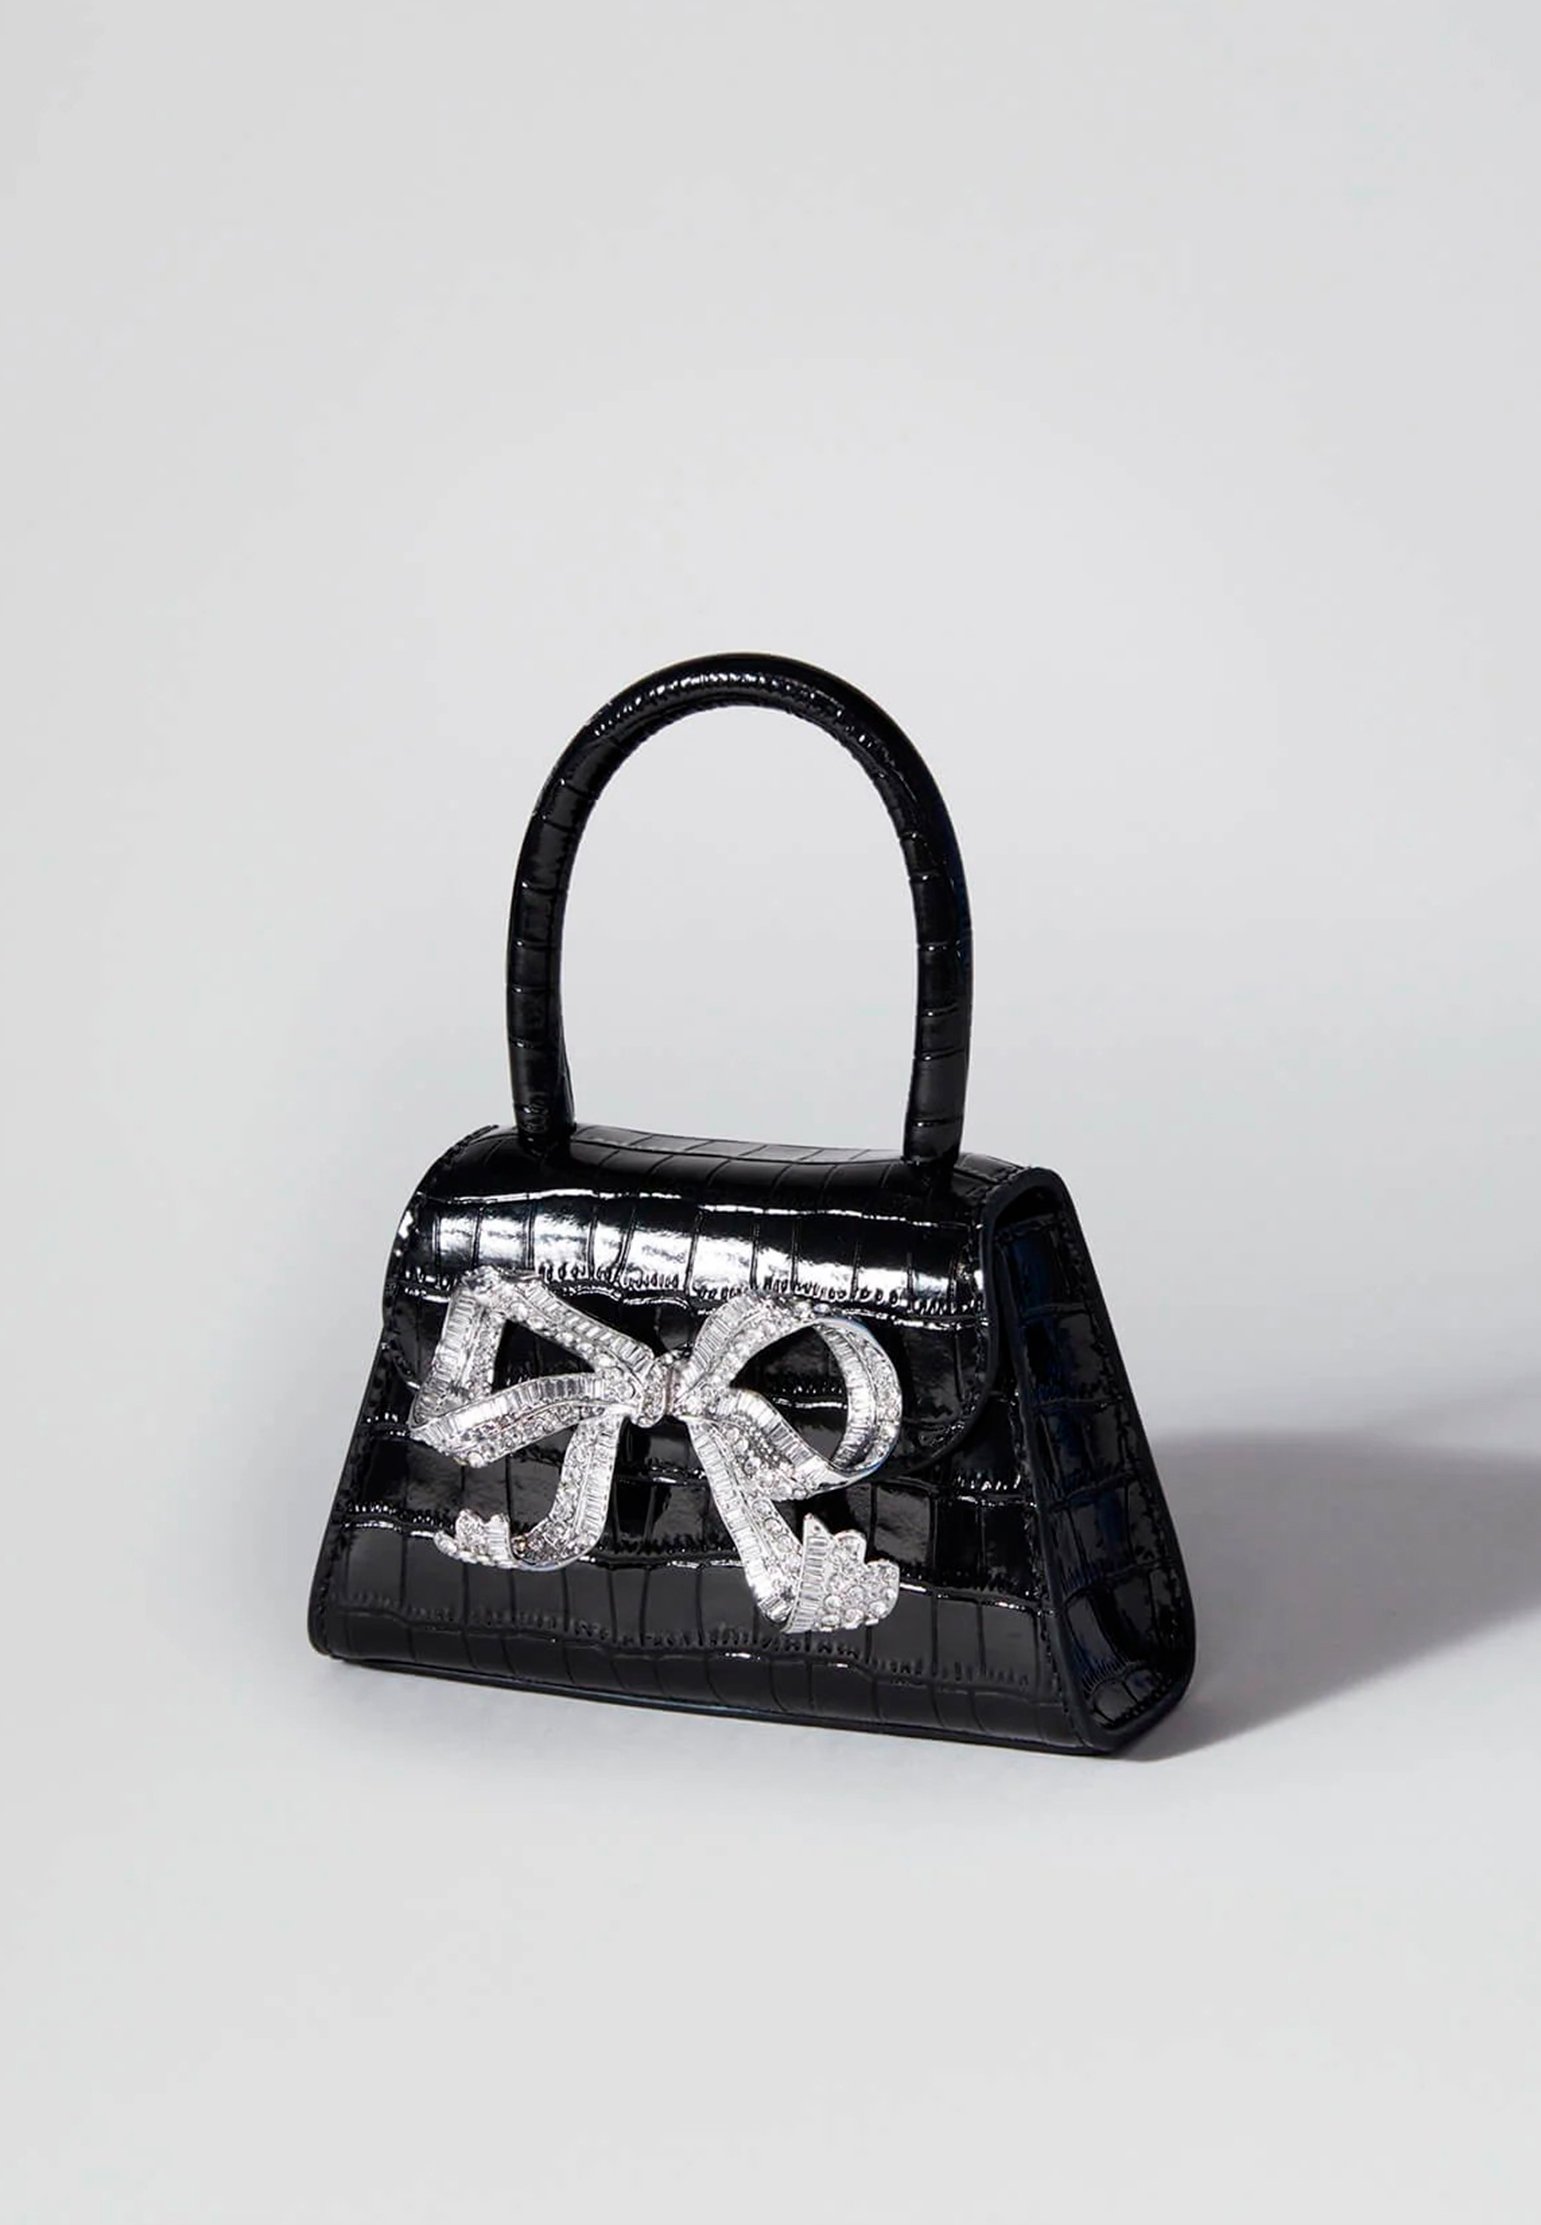 Bag SELF-PORTRAIT Color: black (Code: 2771) in online store Allure